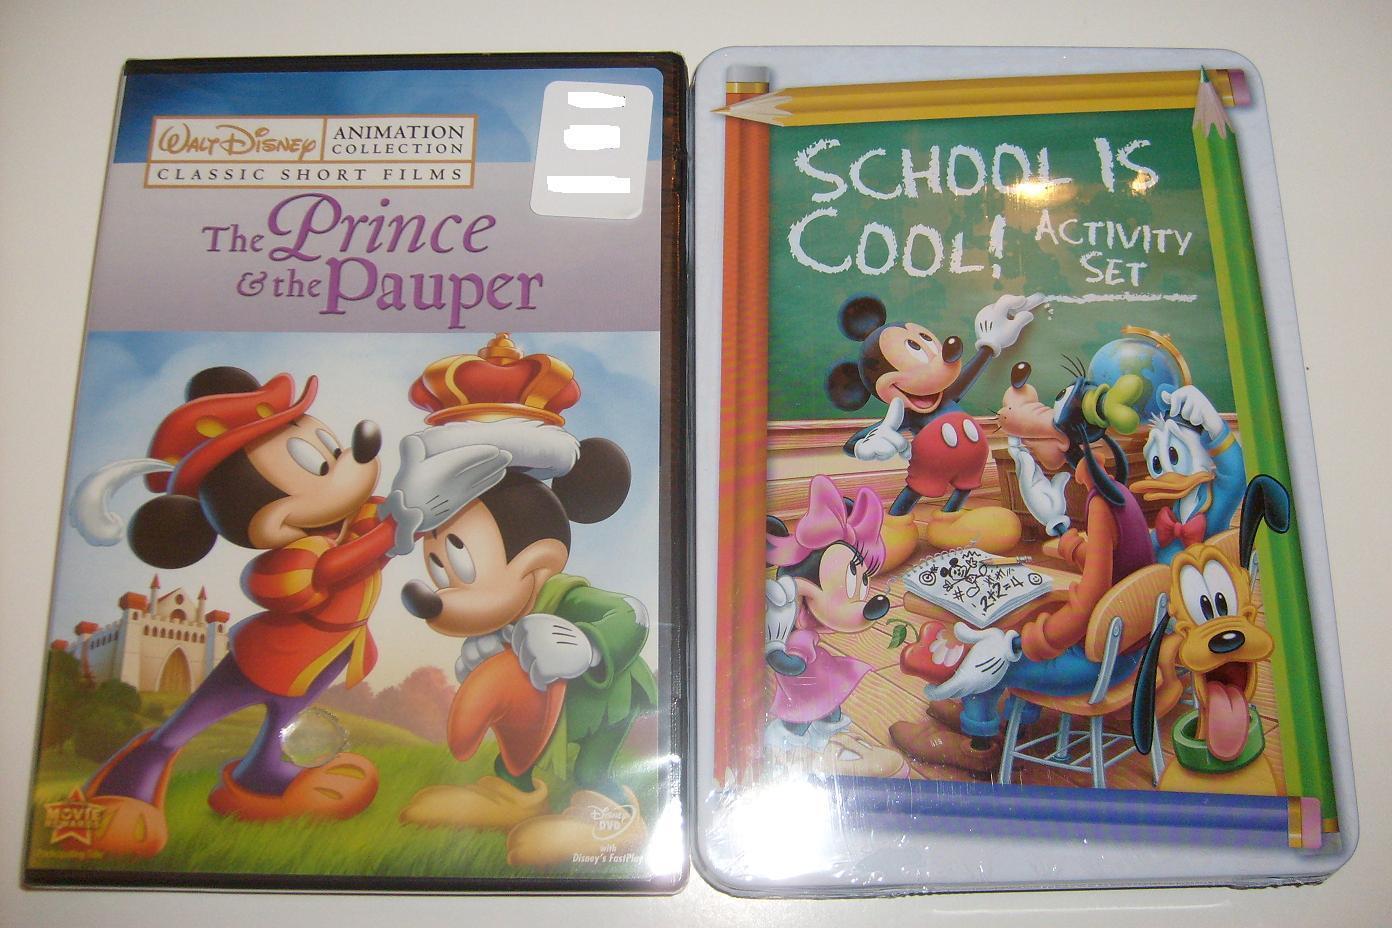 Disney Animated Vol. 3 The Prince & the Pauper DVD +TIN